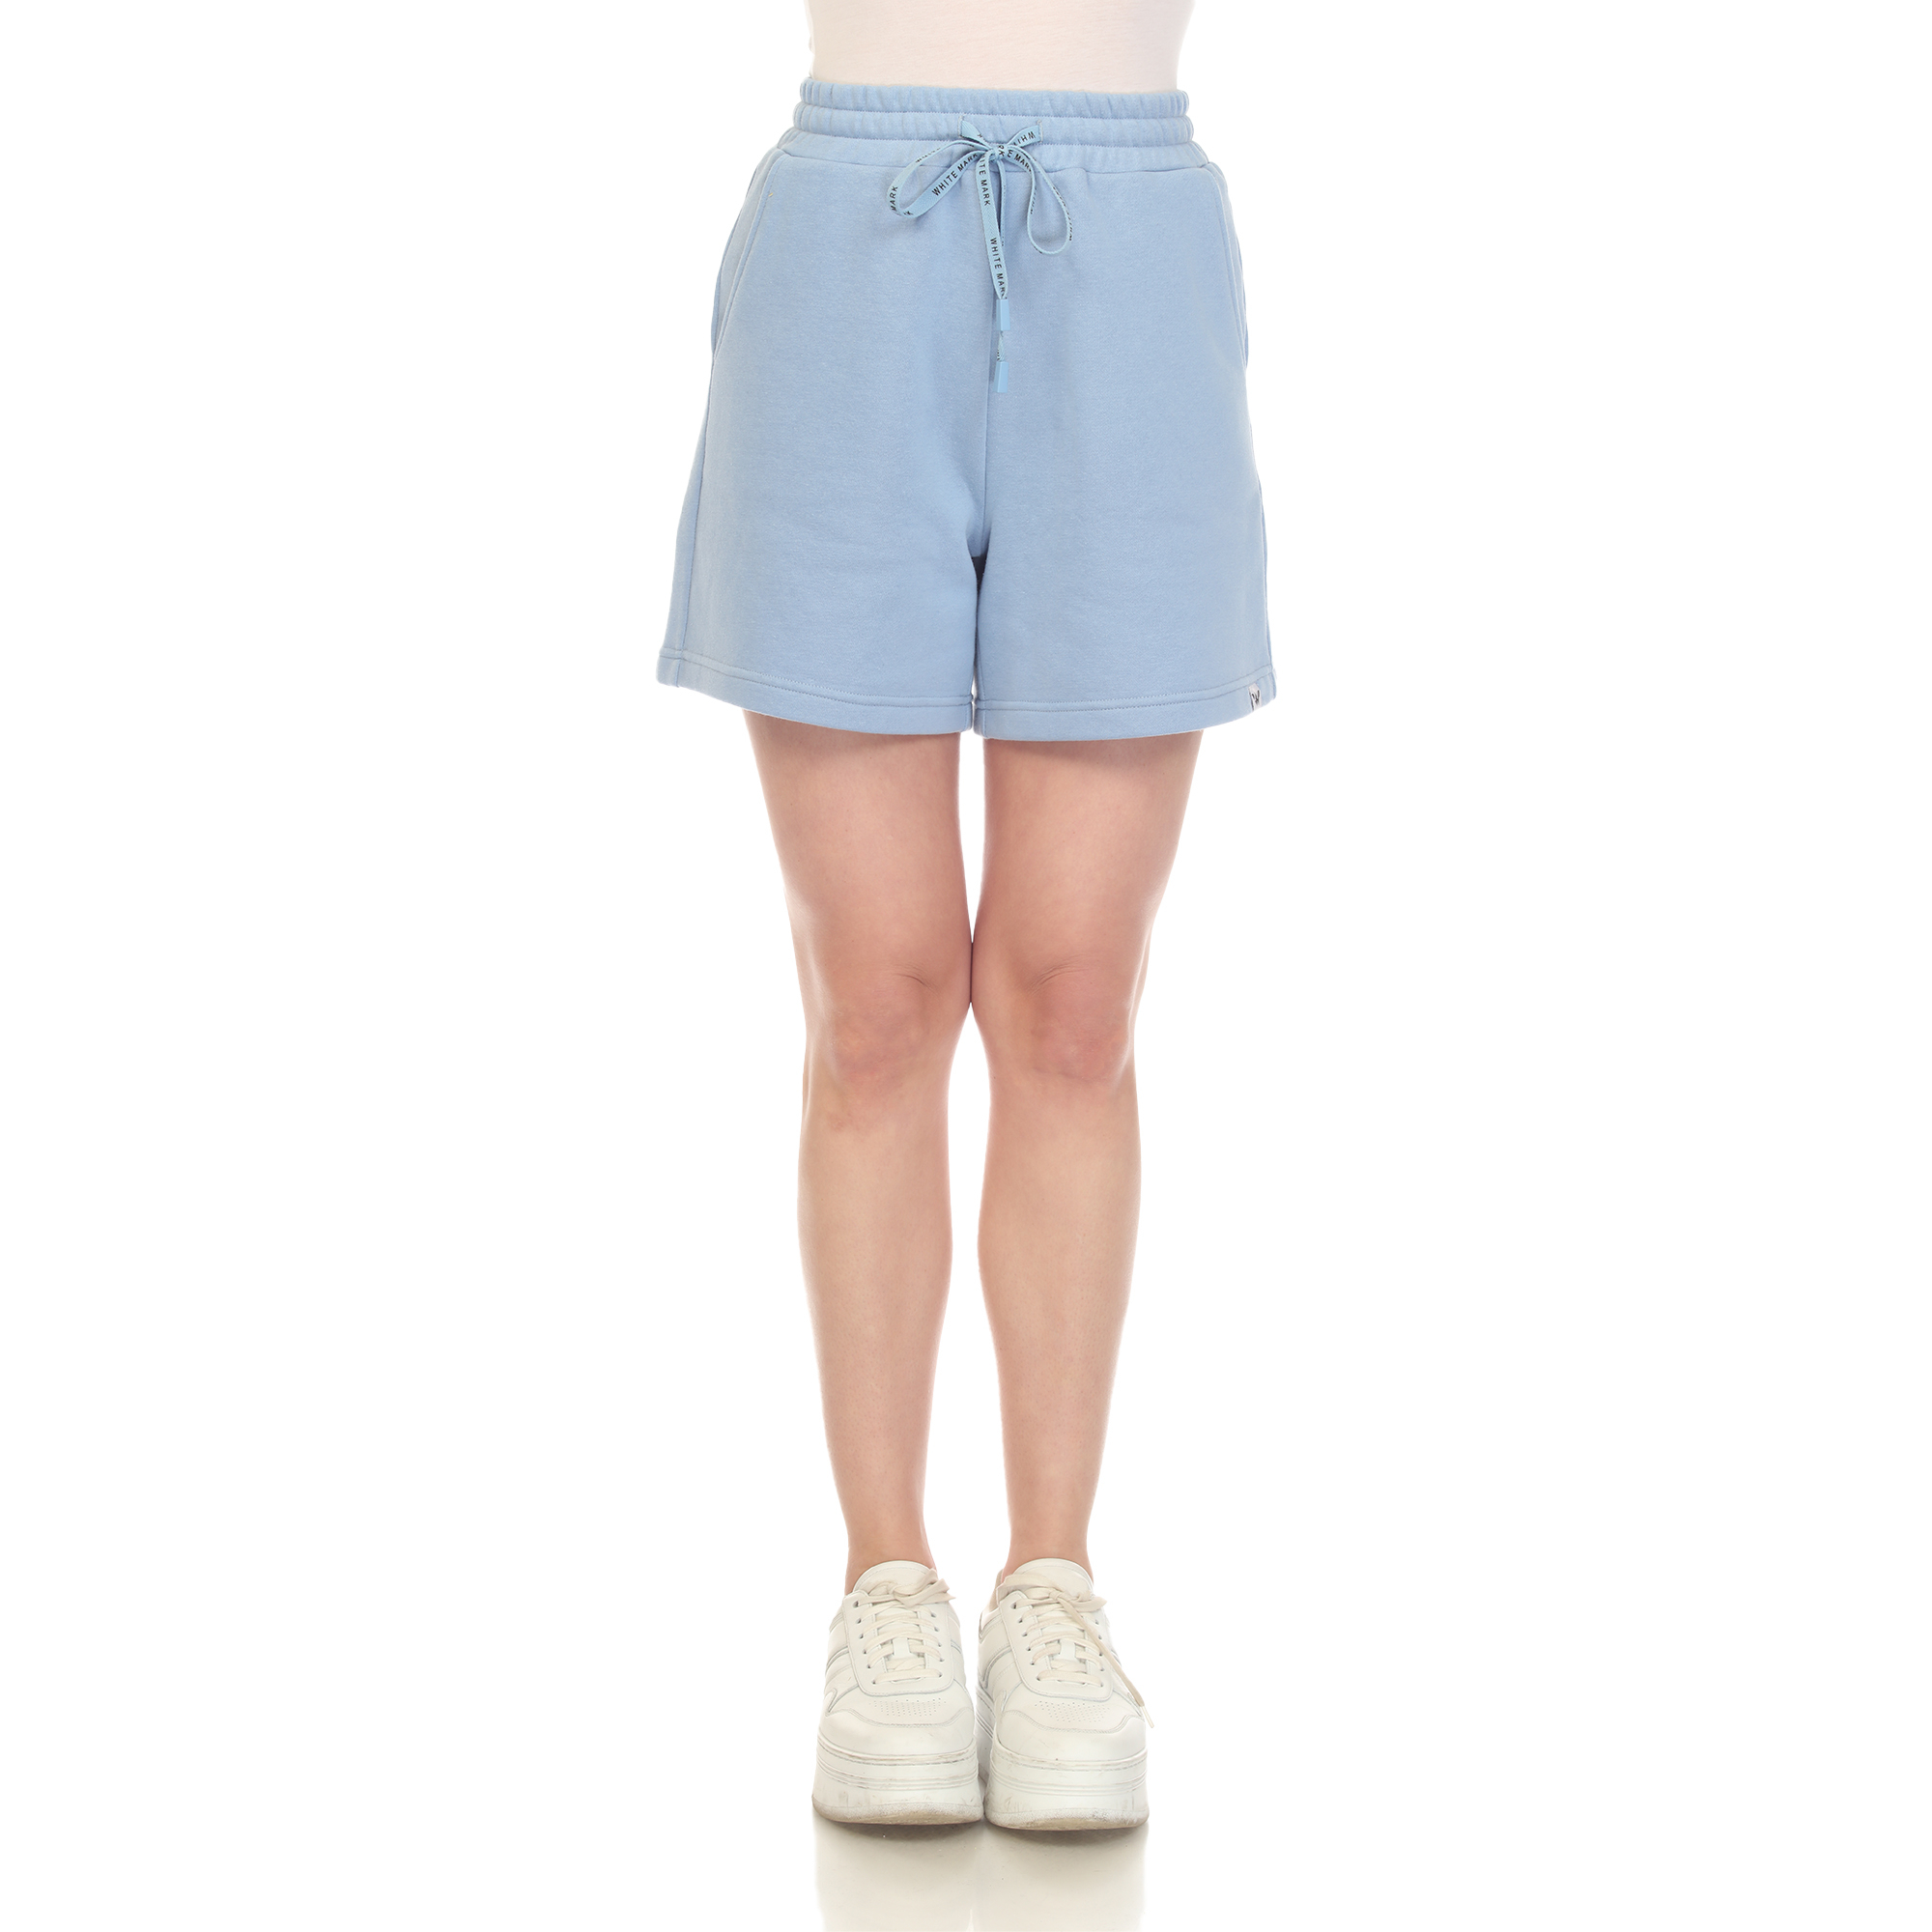 White Mark Women's Super Soft Drawstring Waistband Sweat Shorts - Denim Blue, 2X